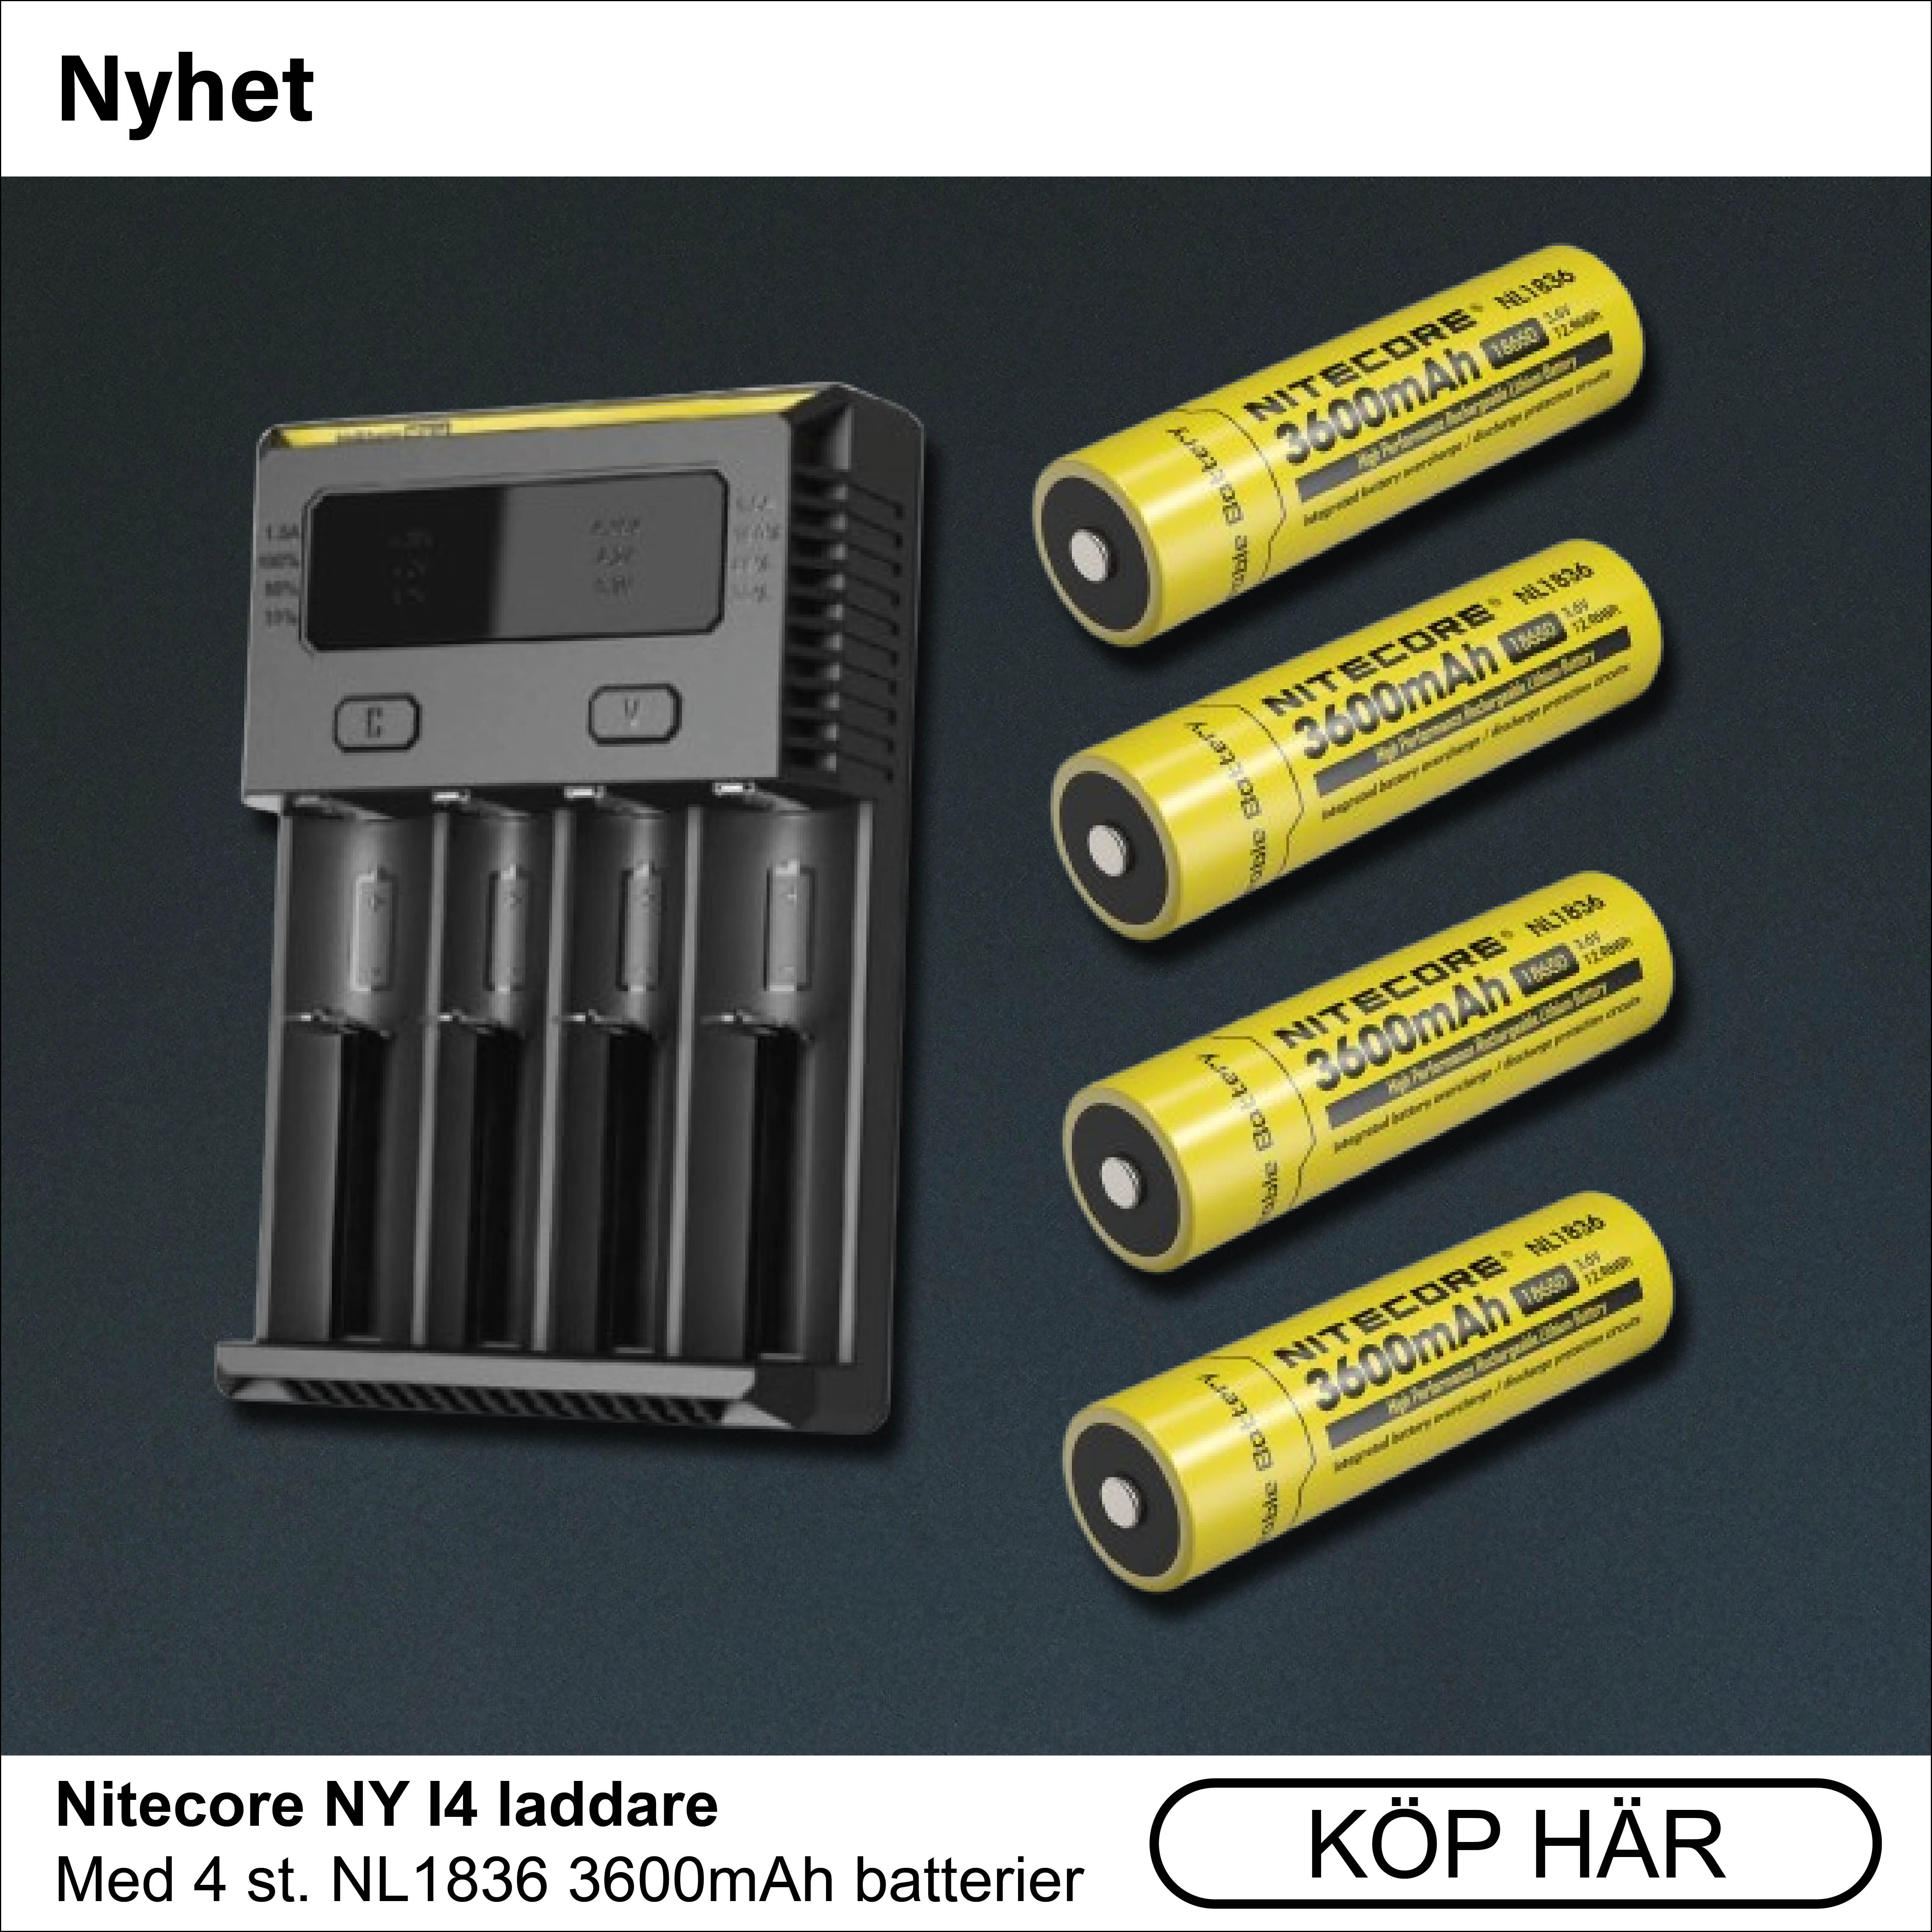 Nitecore NY I4 laddare med 4 st. Nitecore NL1836 3600mAh batterier